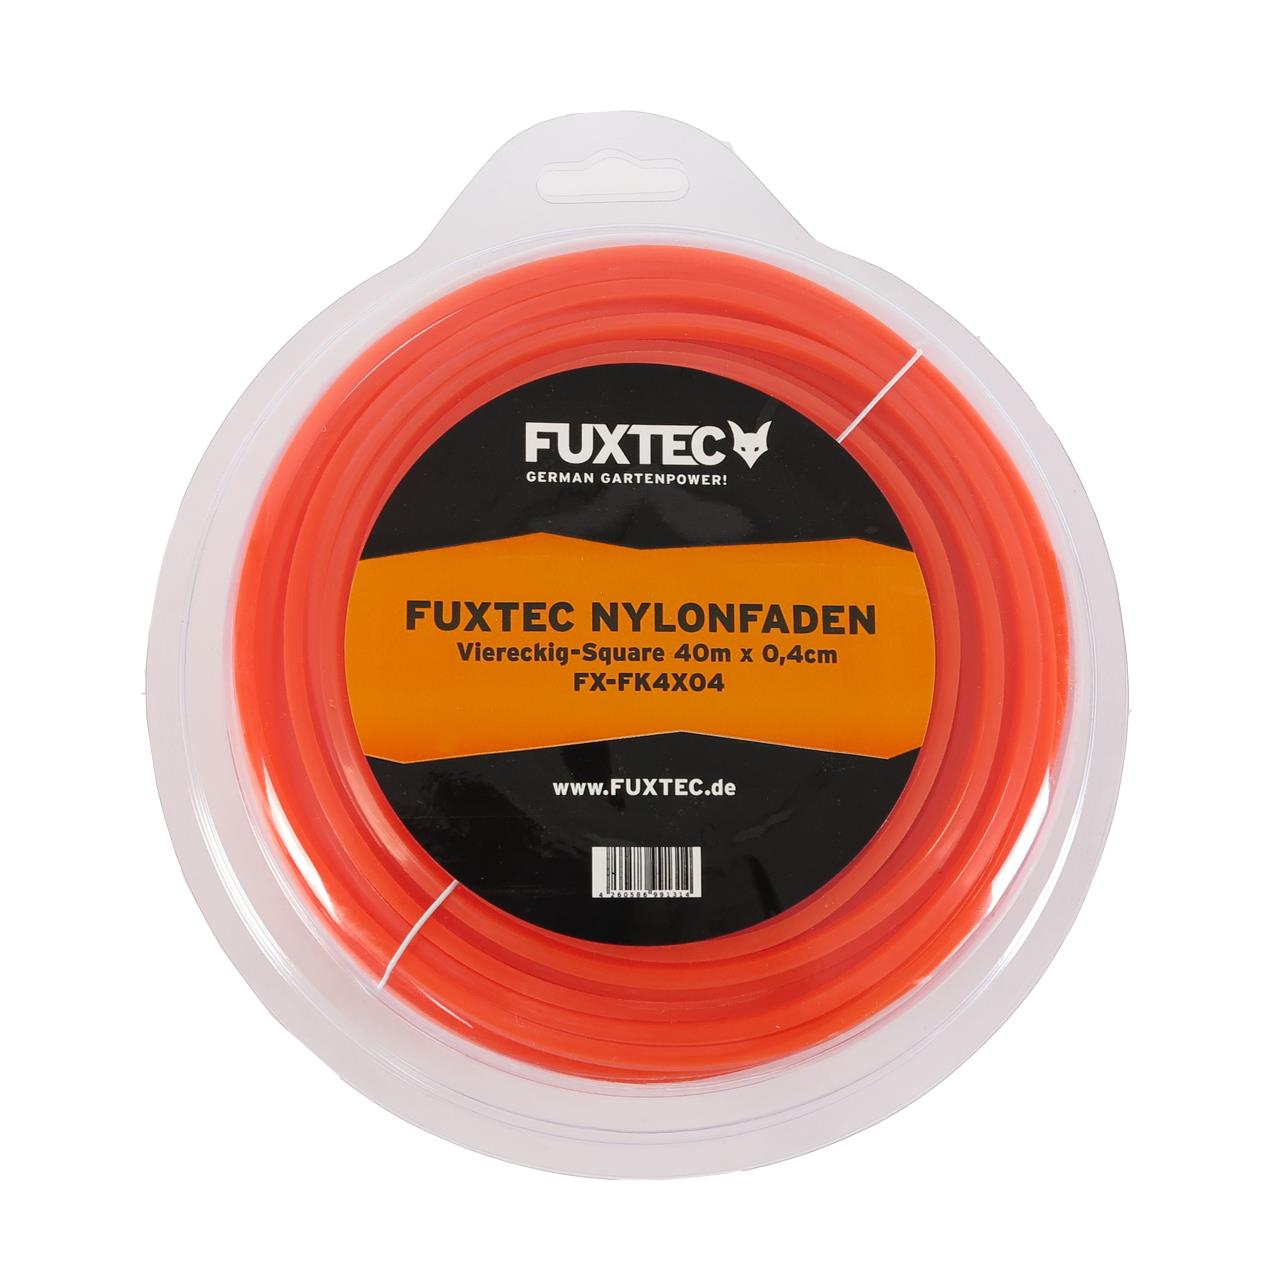 FUXTEC nylon thread - square 40m x 0.4cm